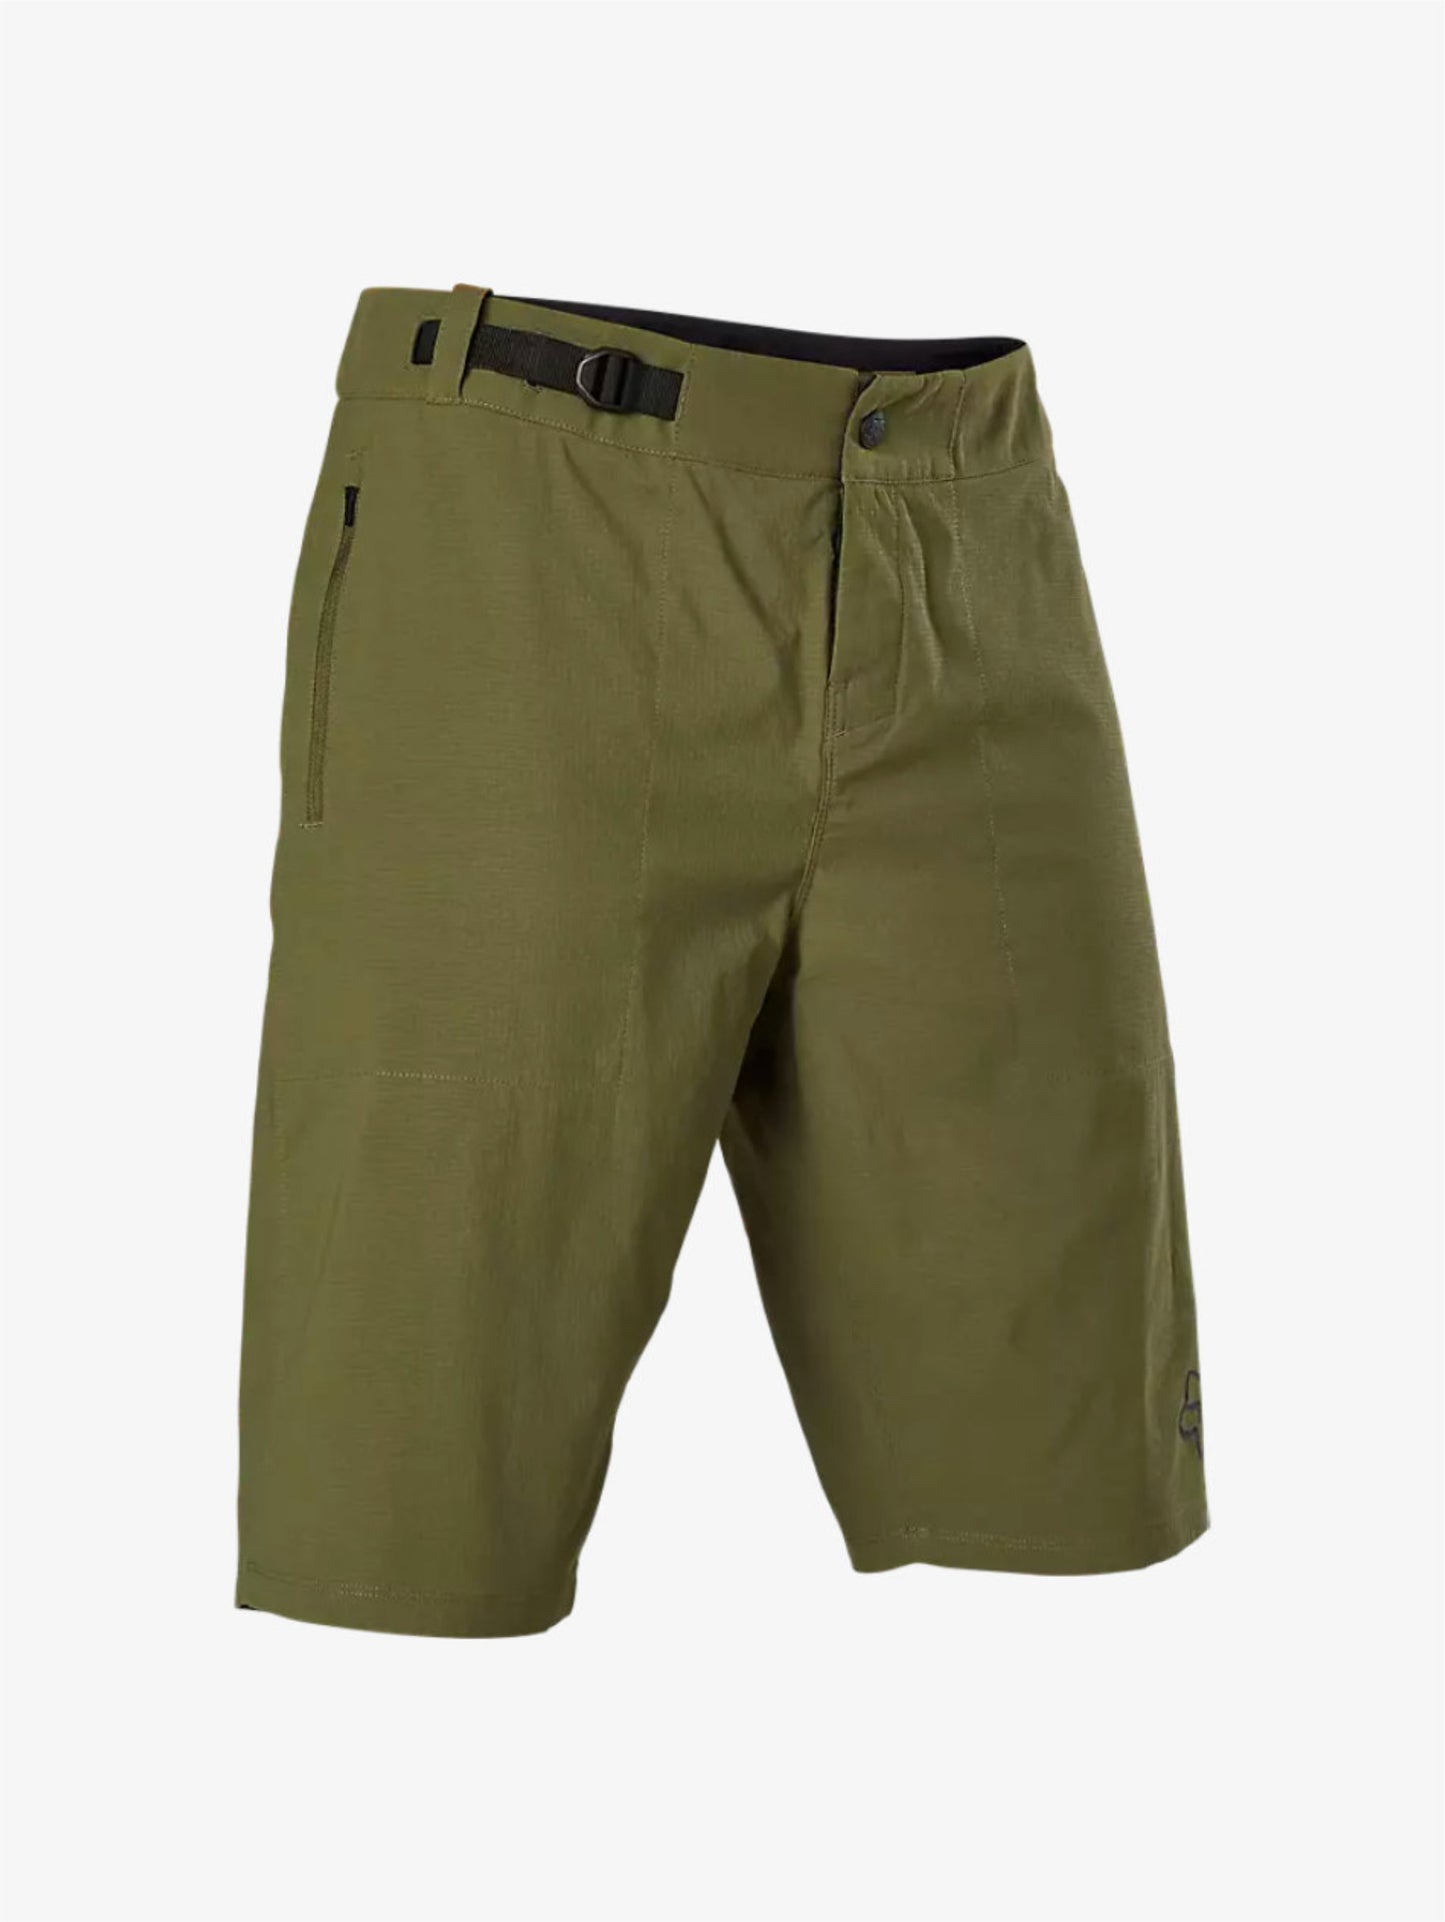 Range Short pantaloni corti bermuda uomo olive green